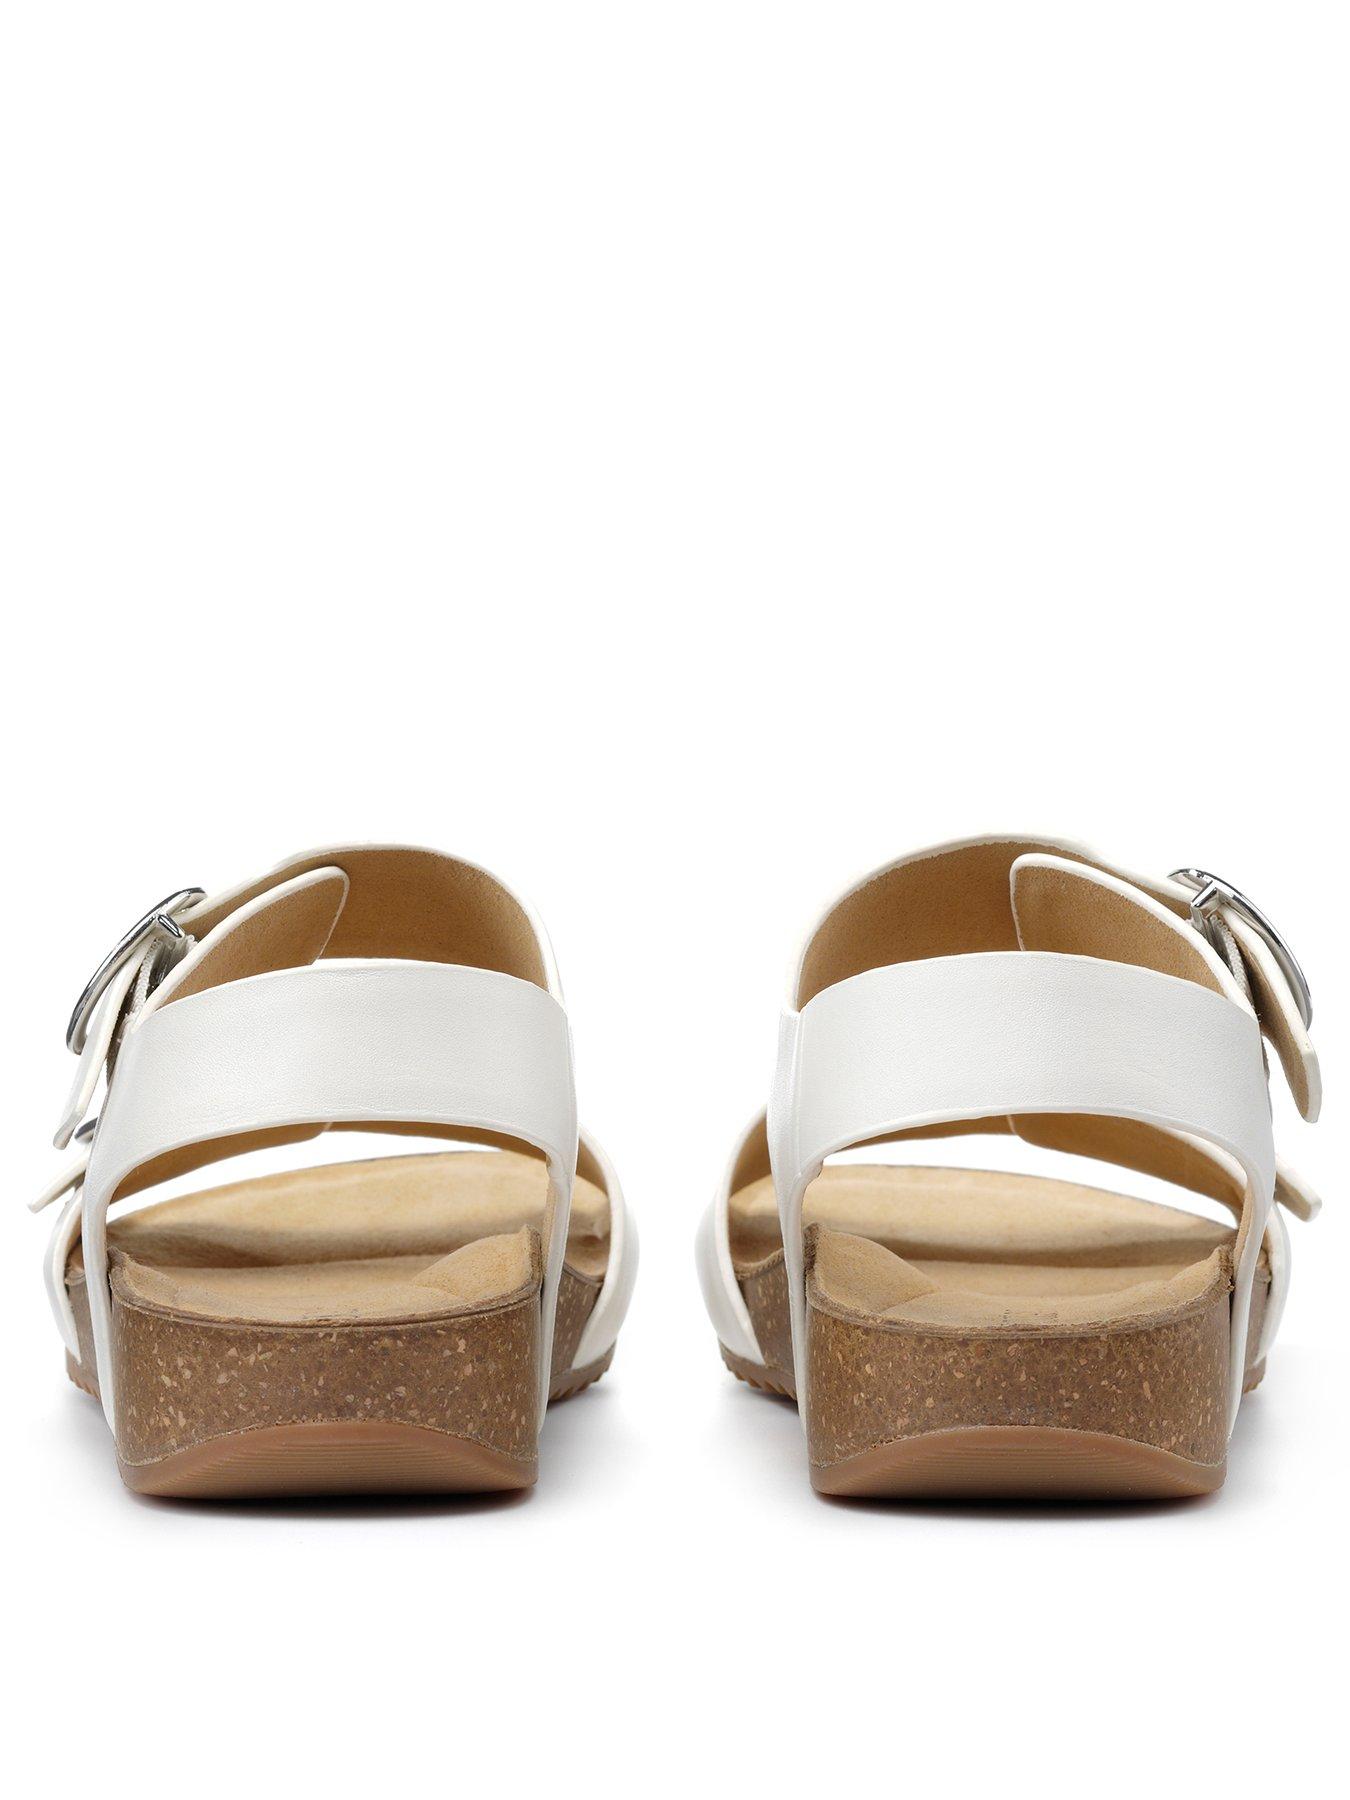 white footbed sandals uk